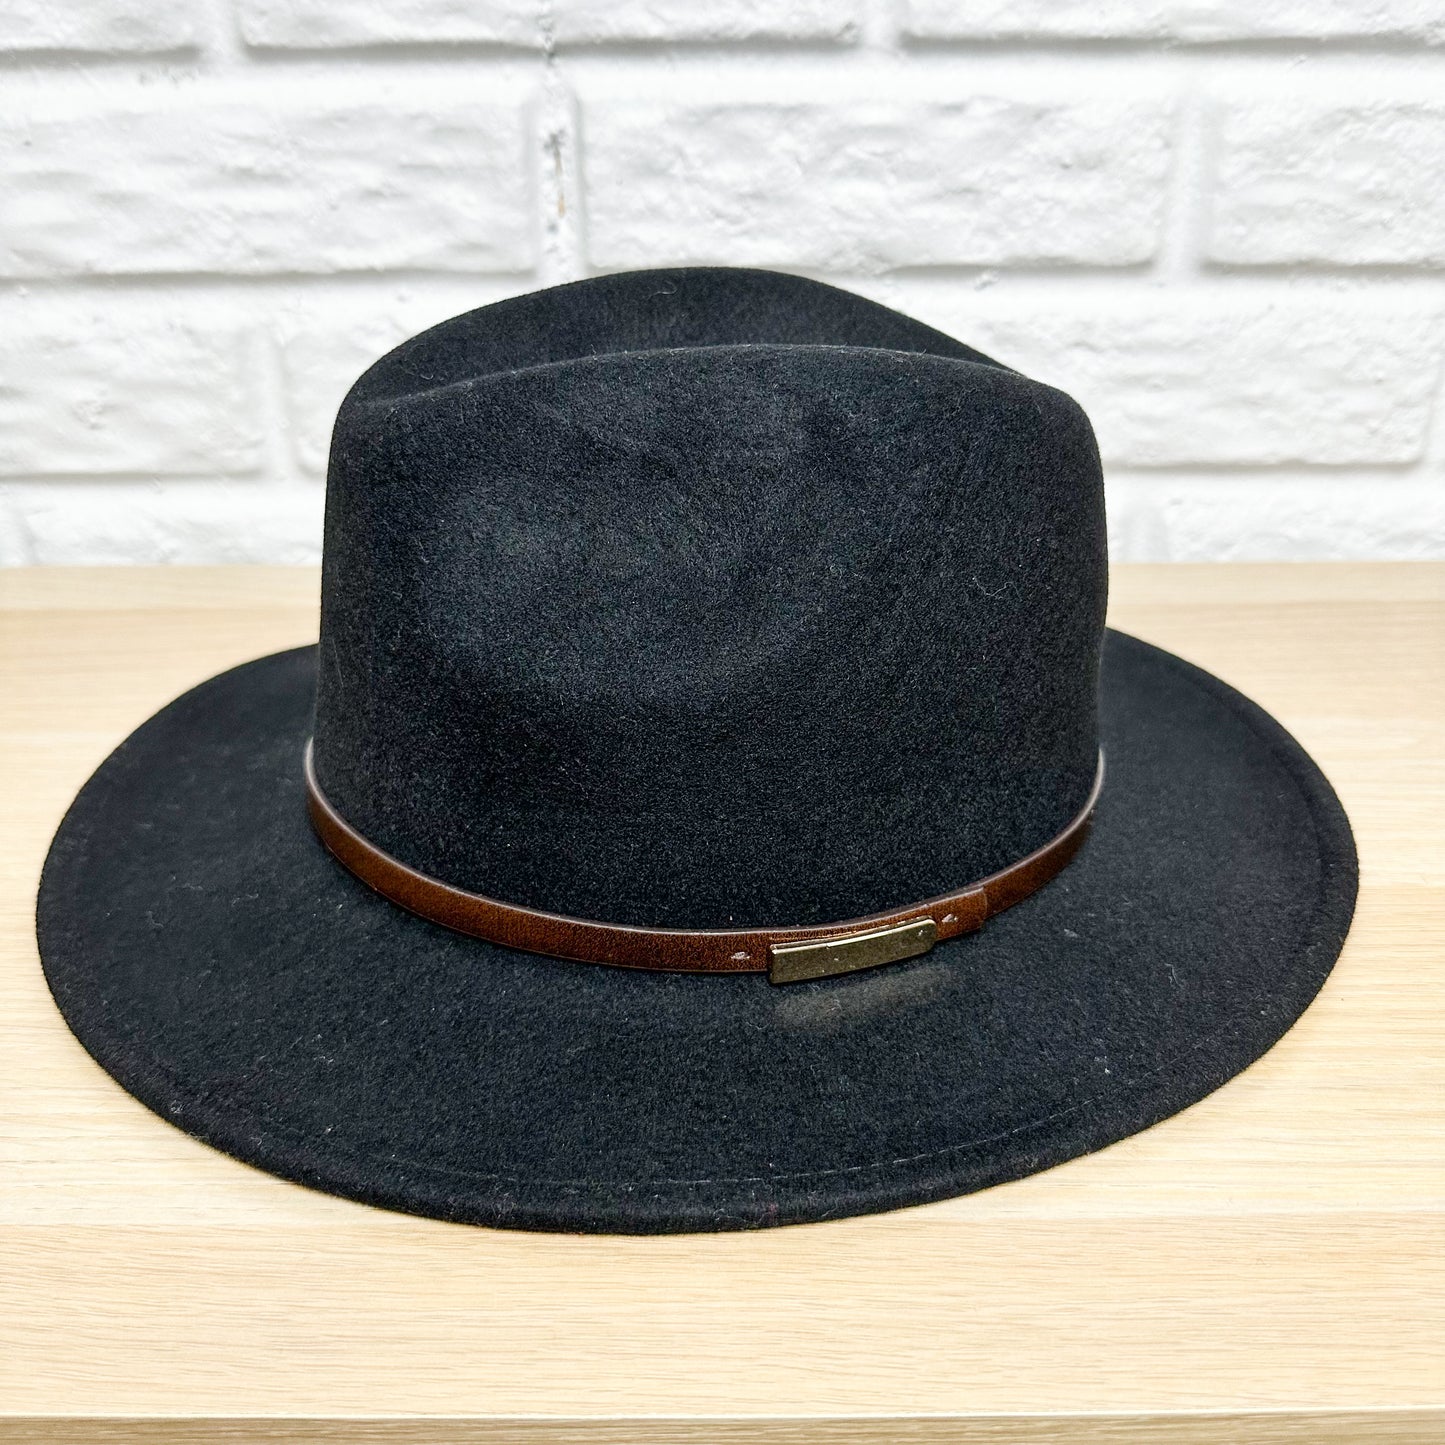 Furtalk New Black Australia Wool Wide Brim Fedora Hat Size Medium